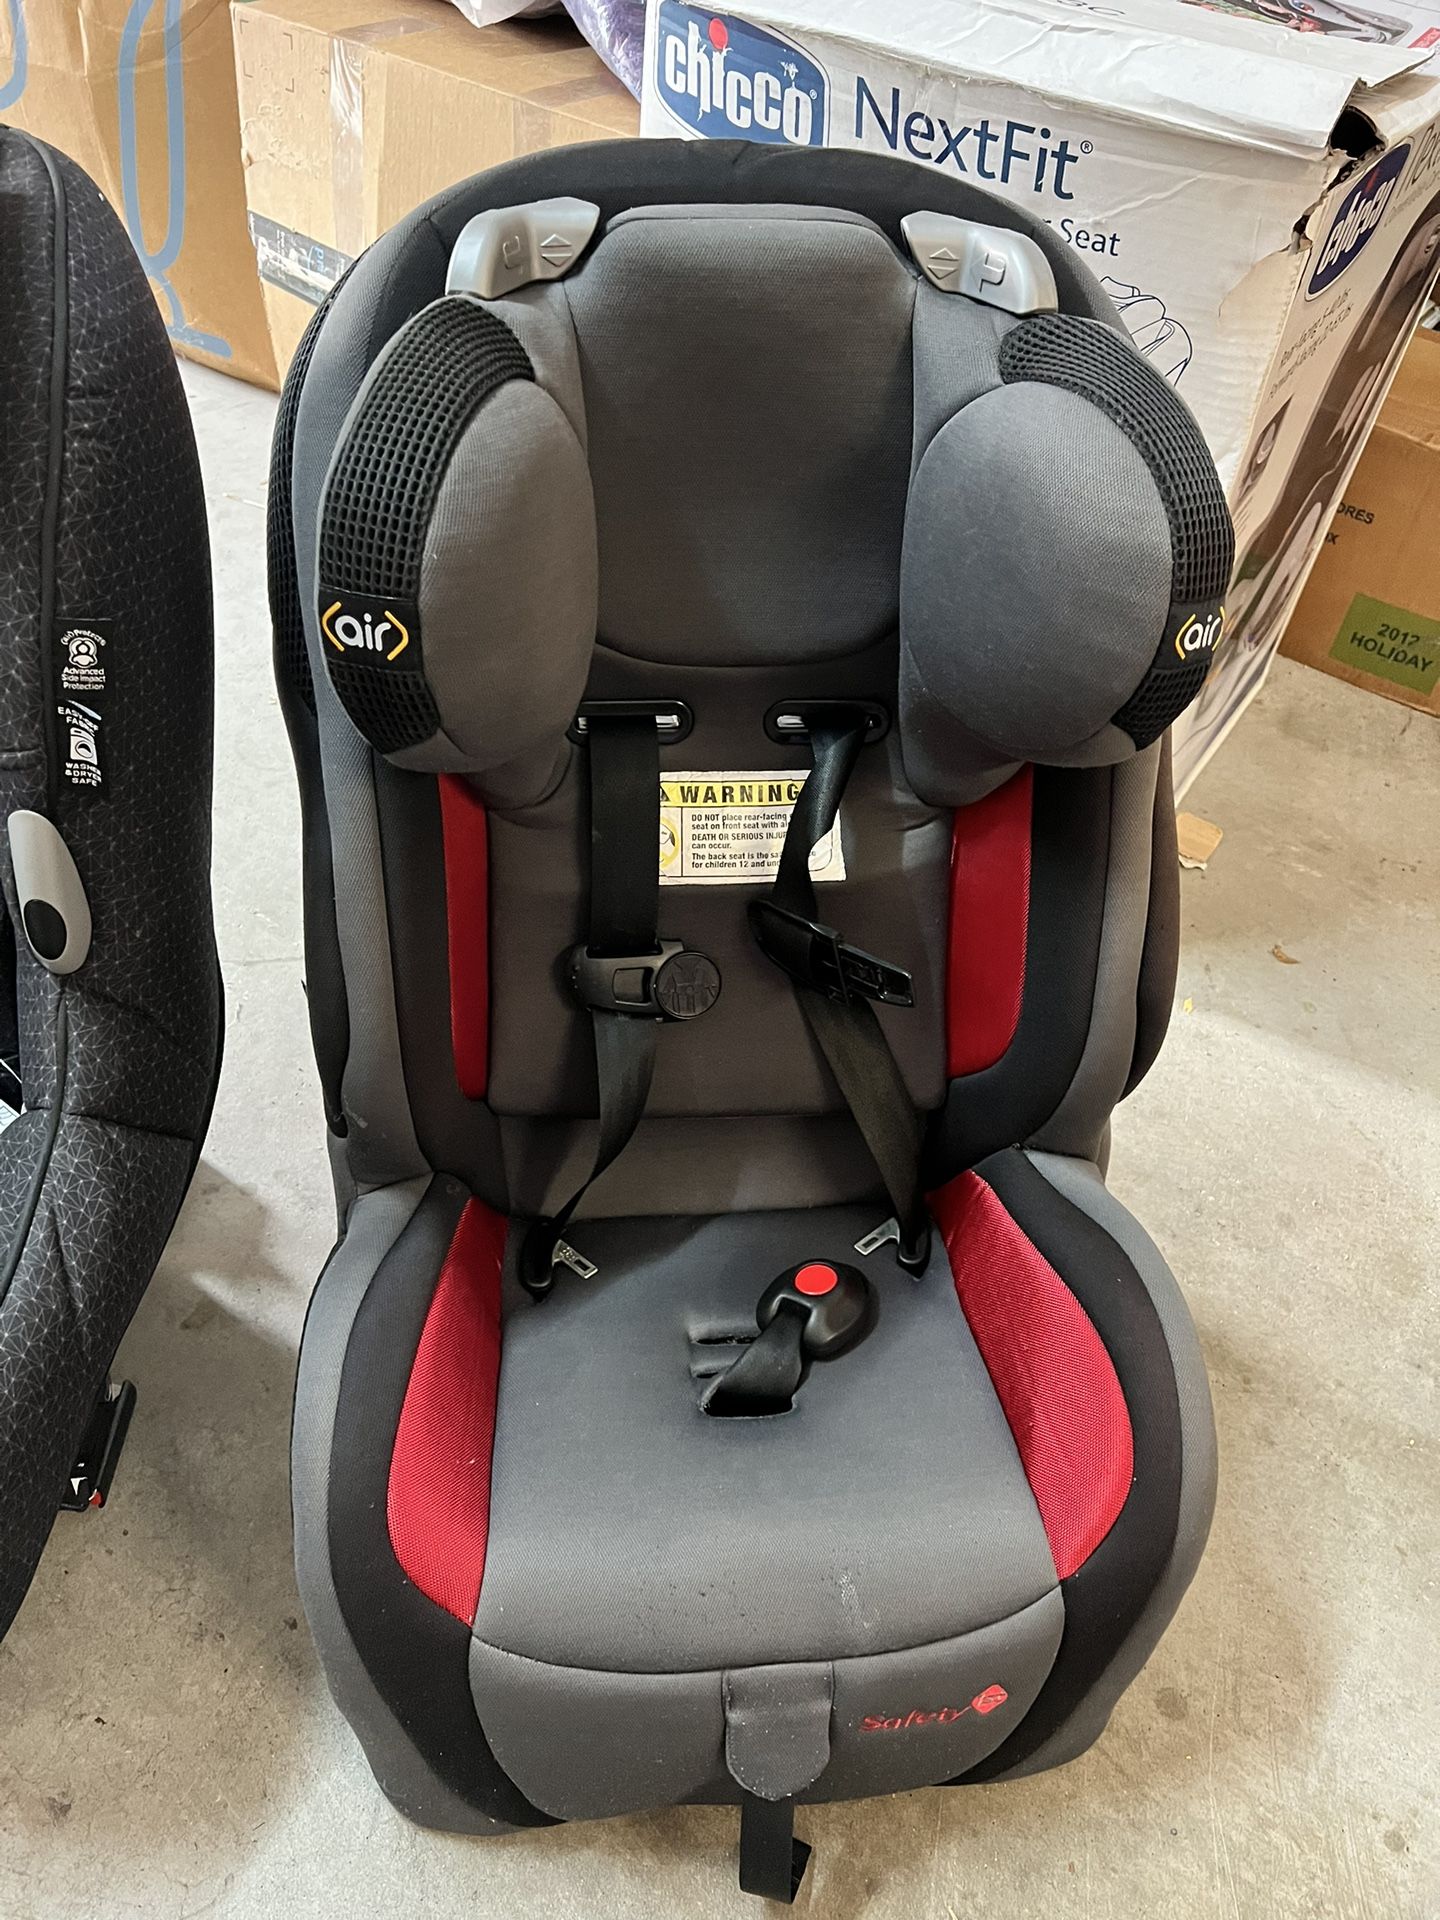 Child seat X2